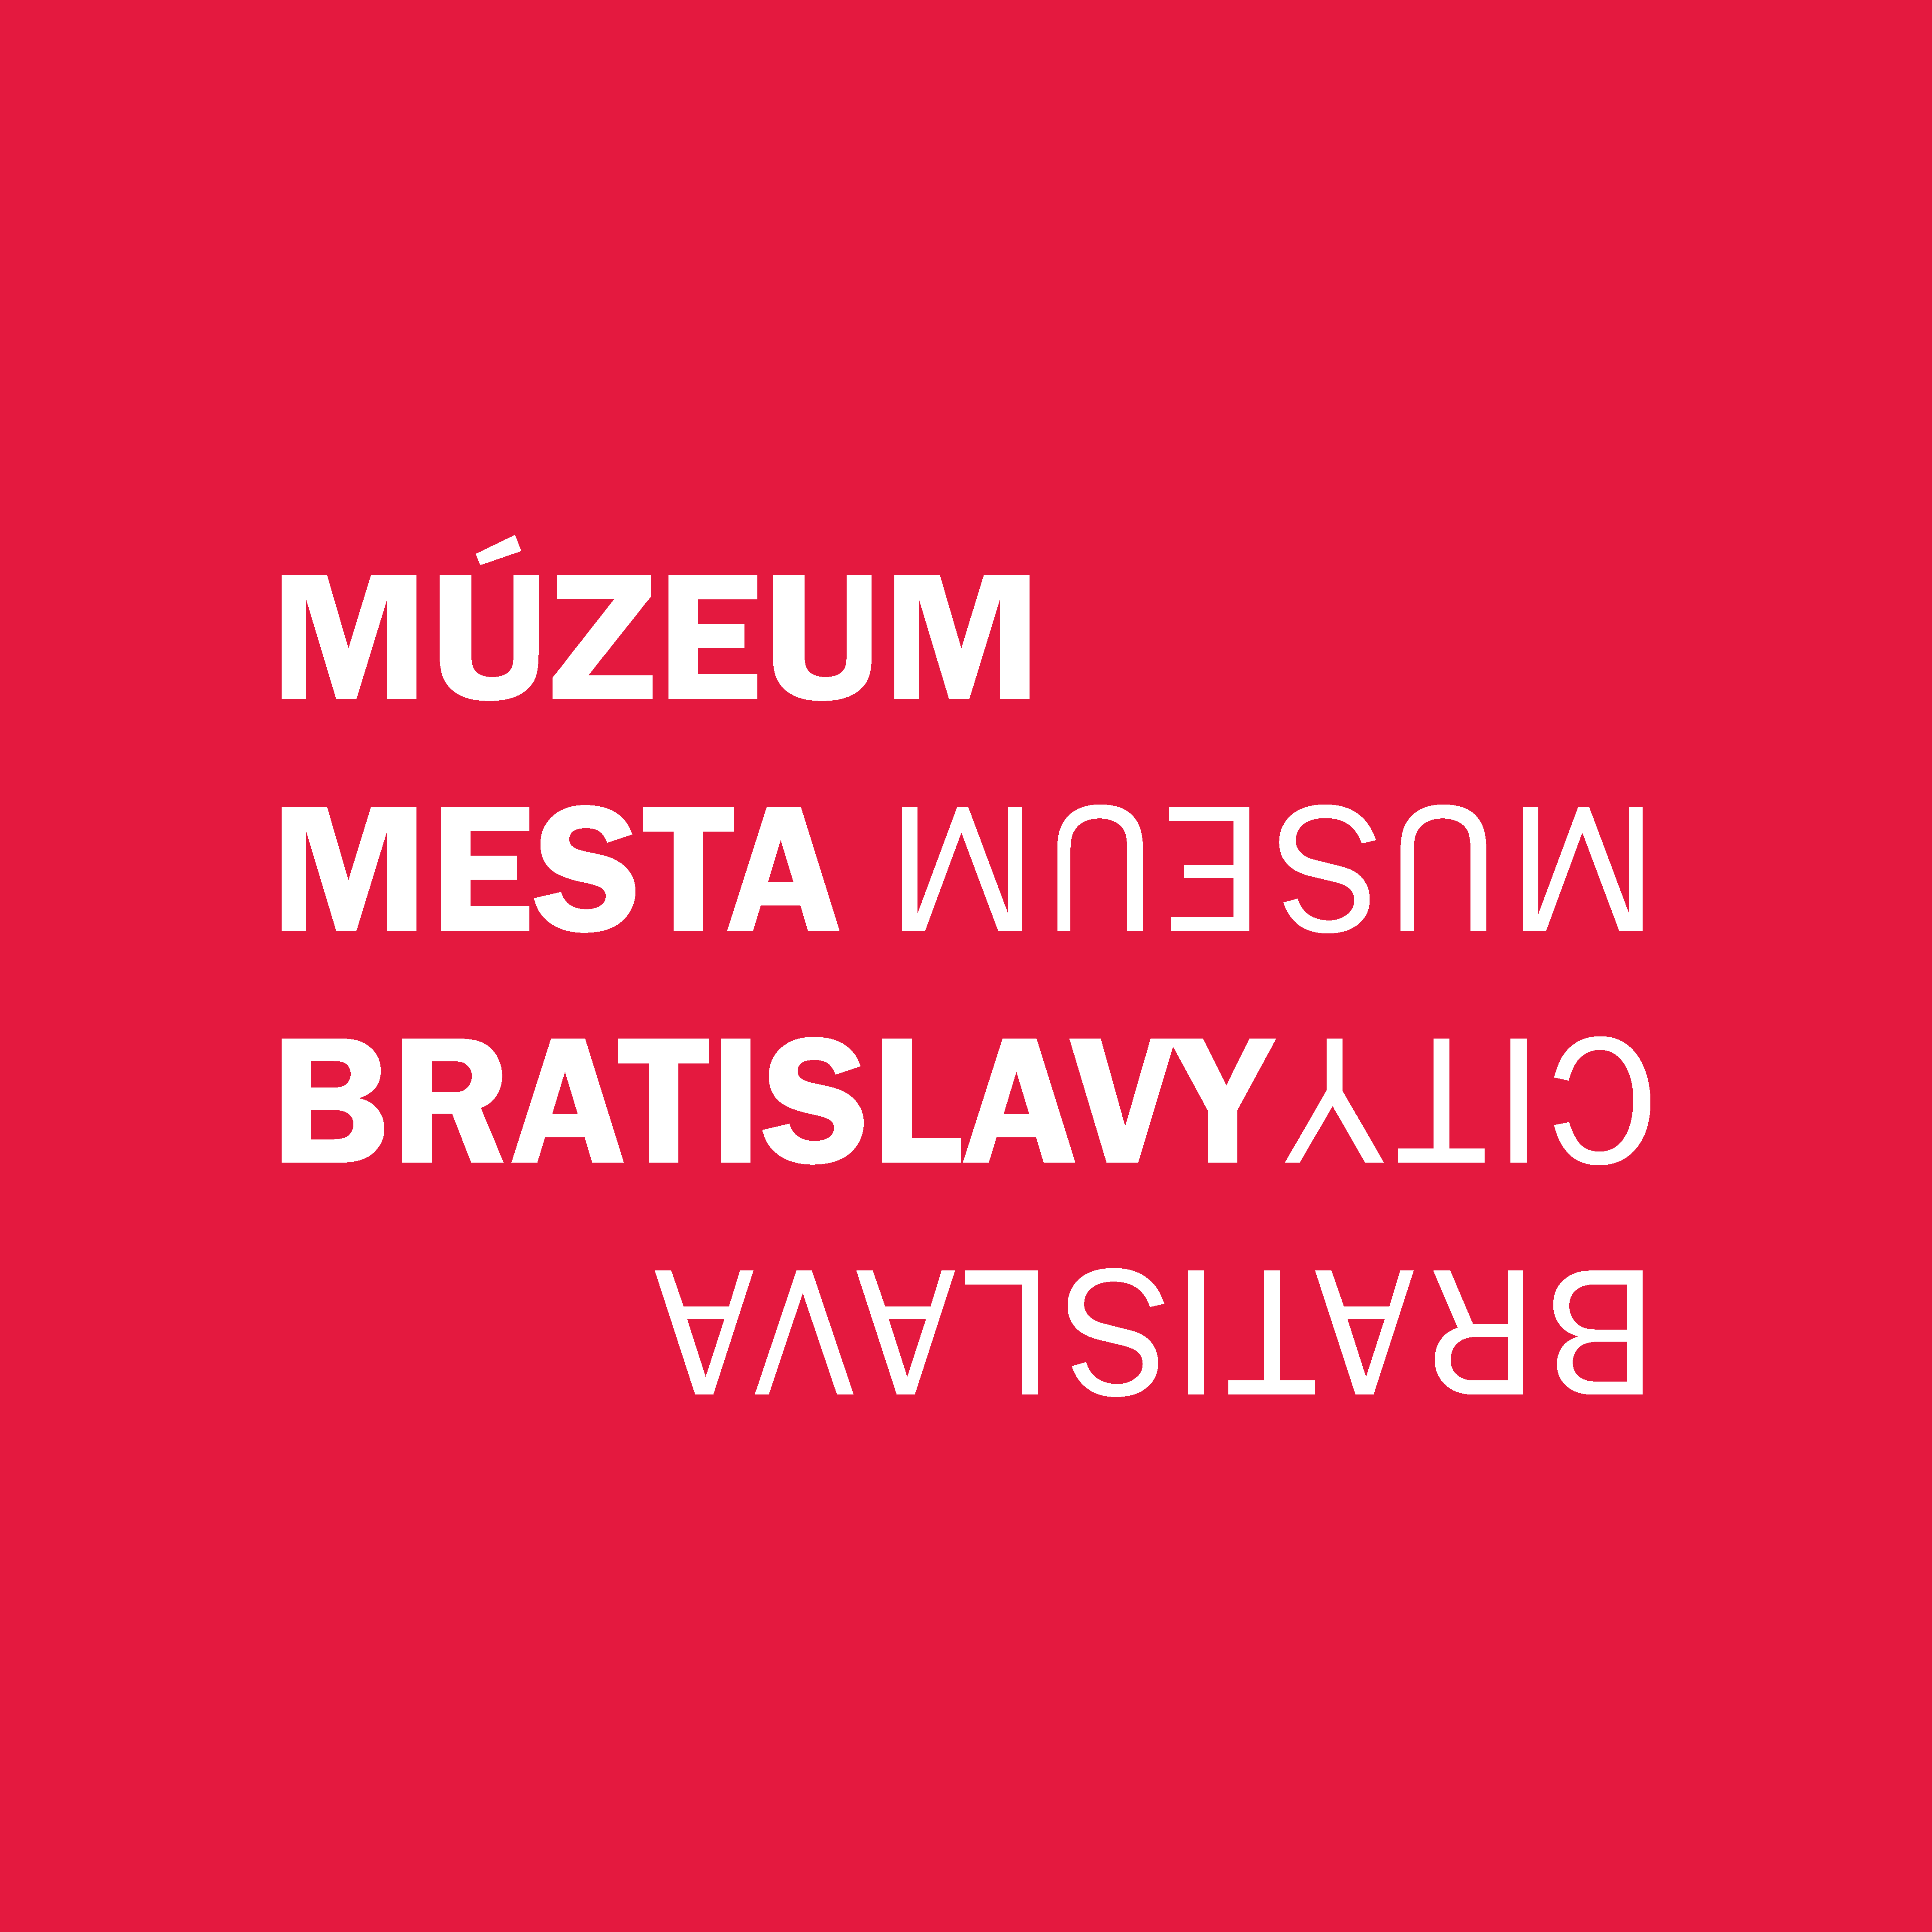 museum ba logo